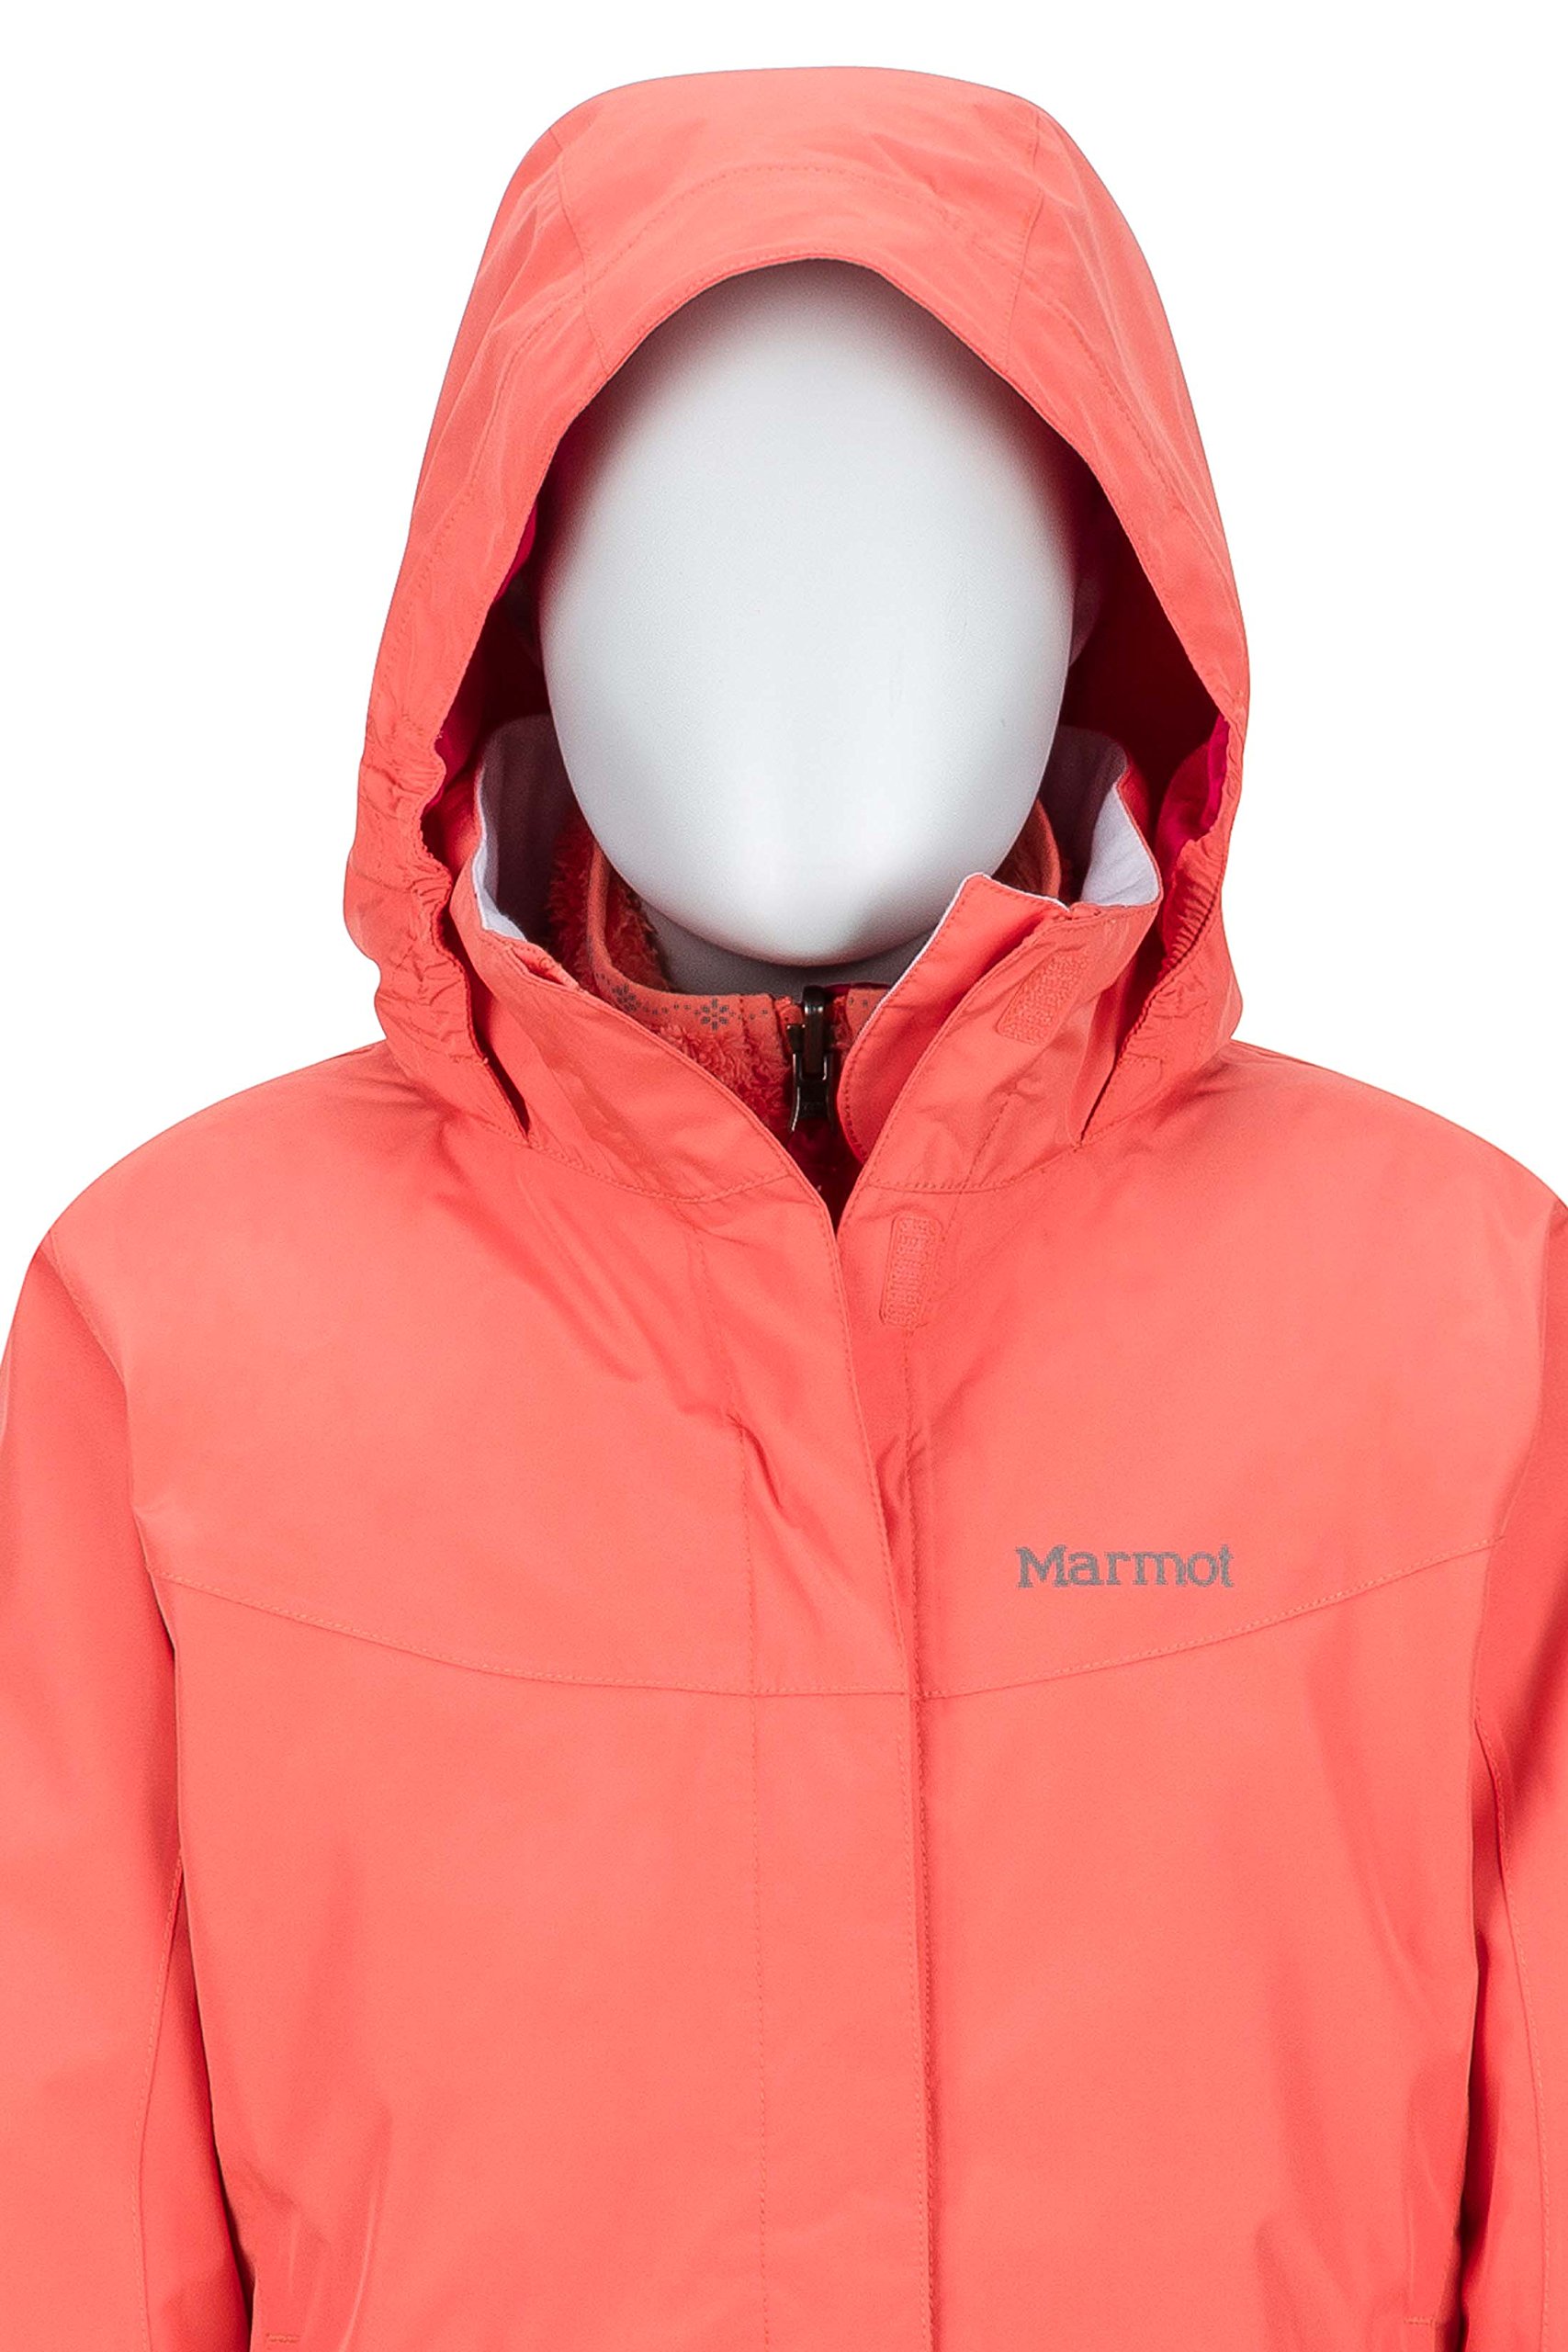 Marmot Northshore Girls' Waterproof Hooded Rain Jacket with Removable Fleece Liner